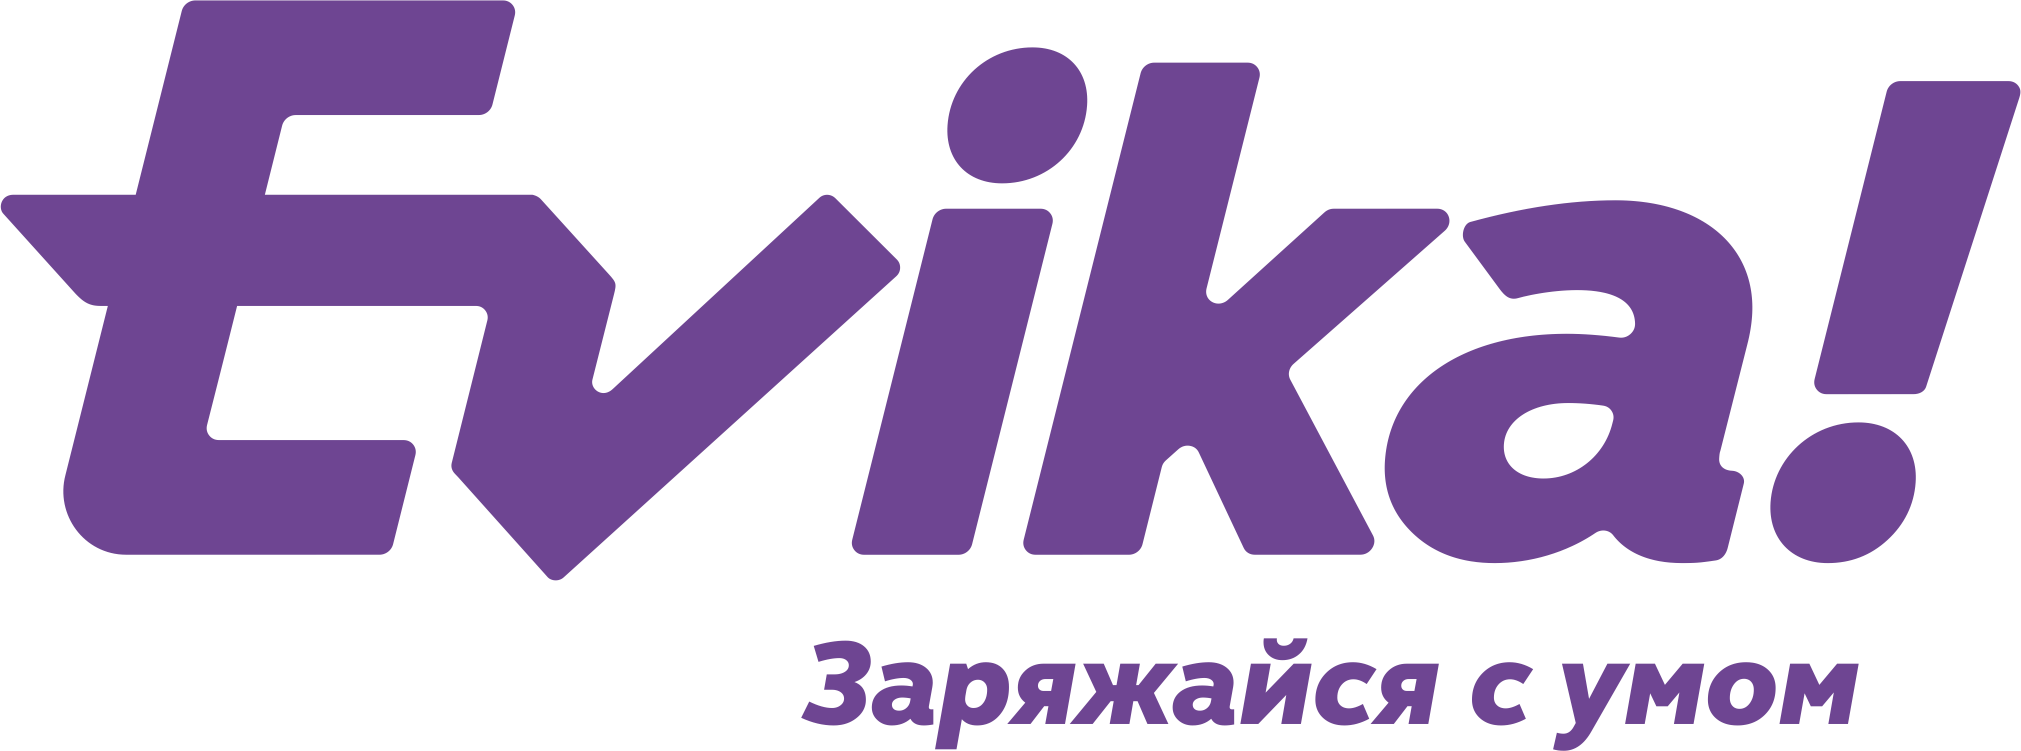 Evika-logo.png